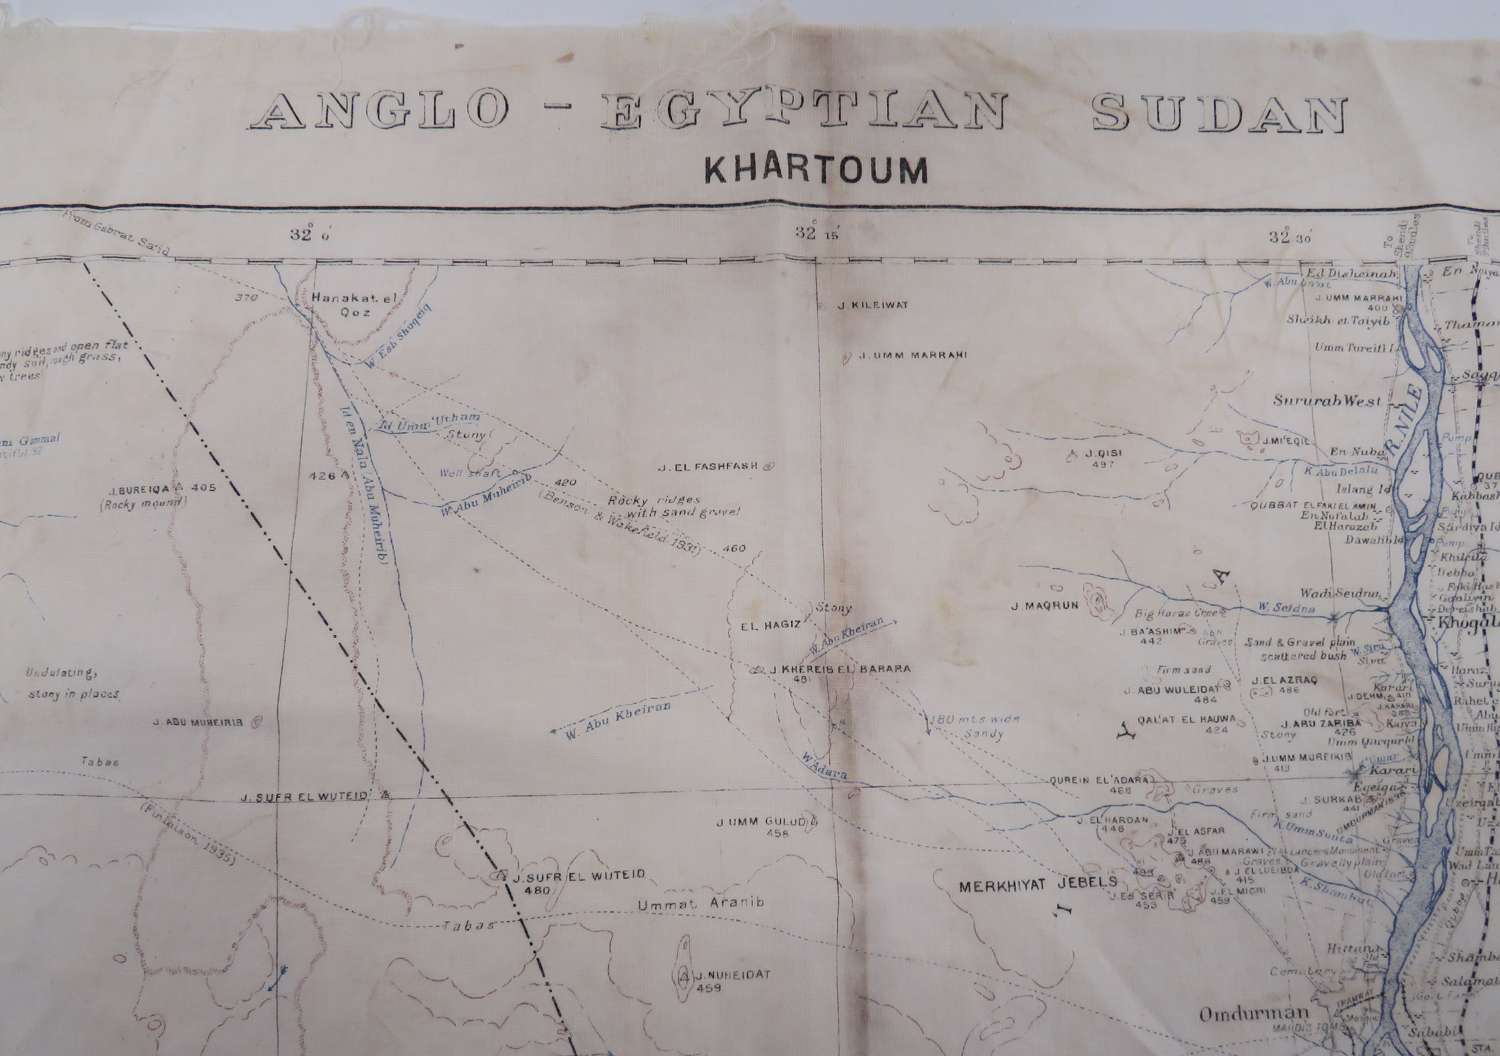 Rare Anglo-Egyptian Sudan Escape Map Covering Khartoum 1940